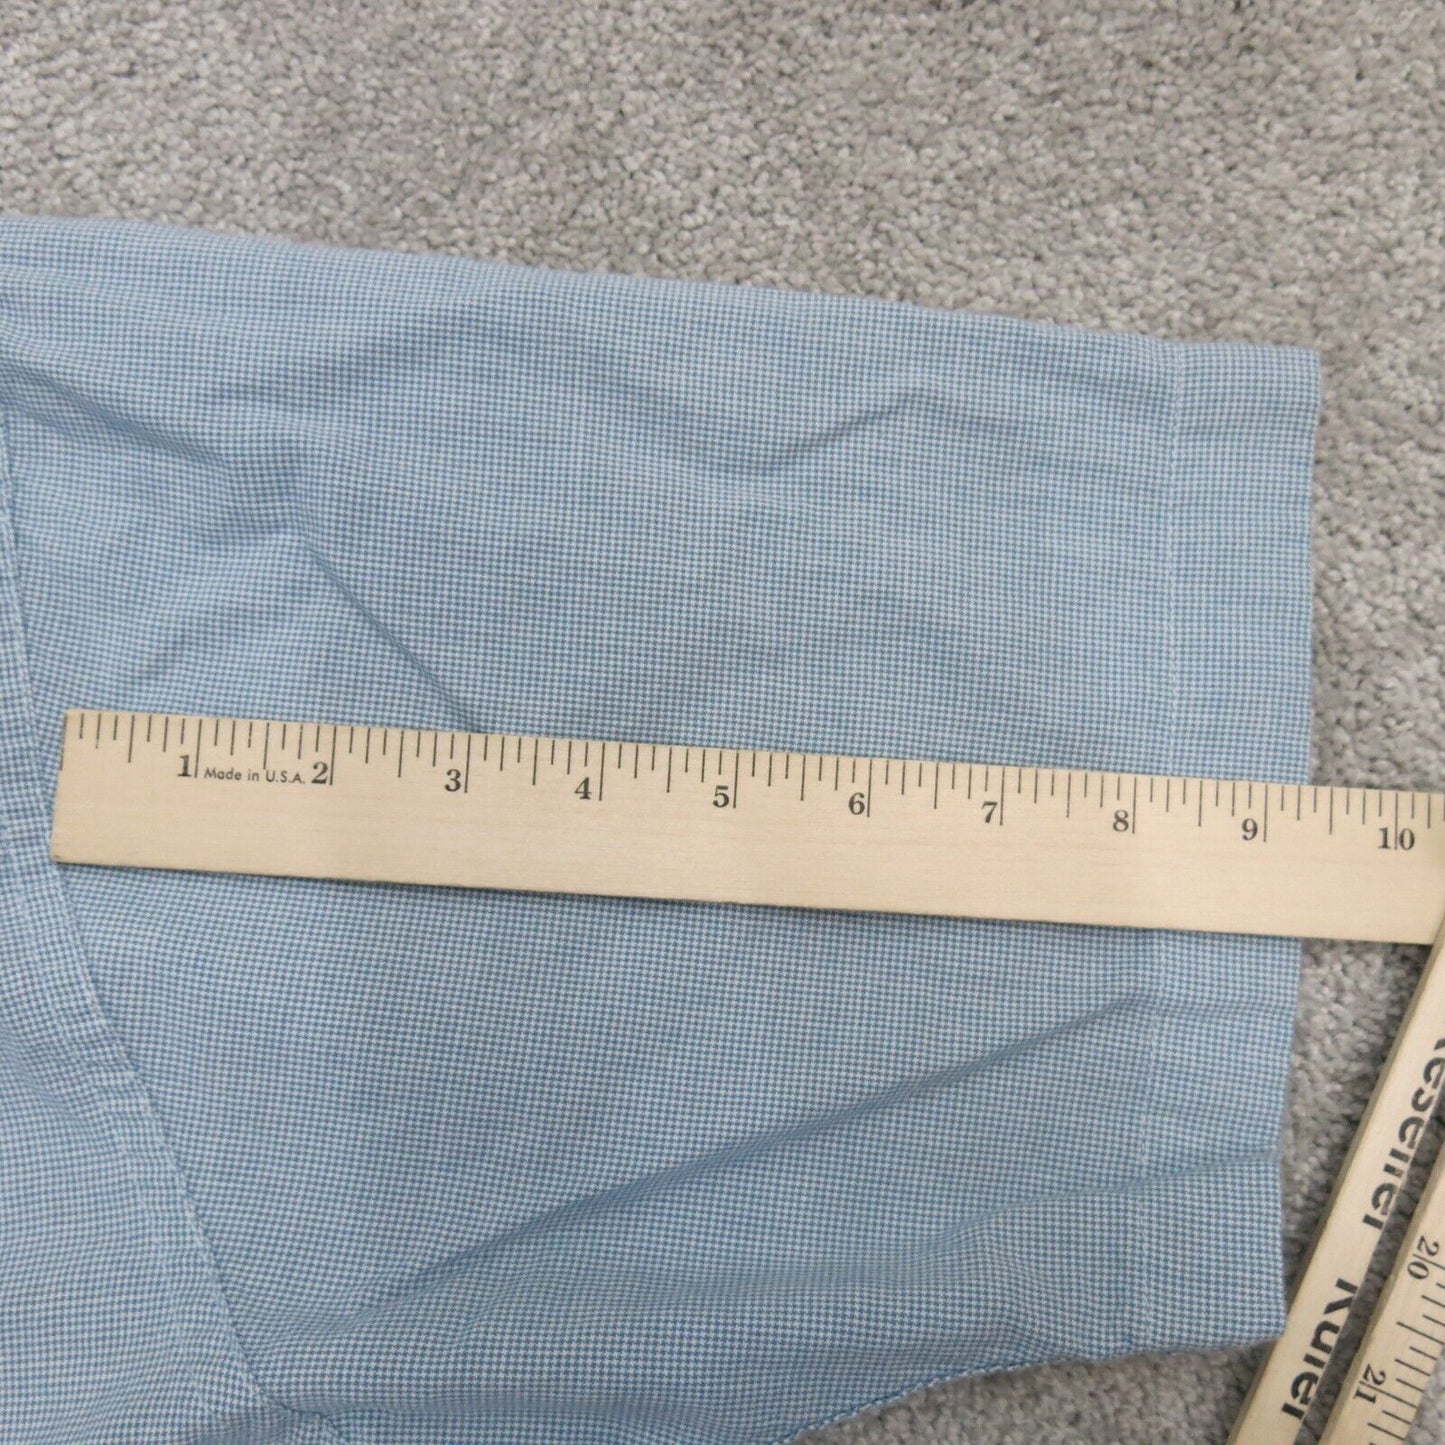 Wrangler Mens Button Up Shirt Houndstooth Short Sleeves 100% Cotton Blue SZ XL